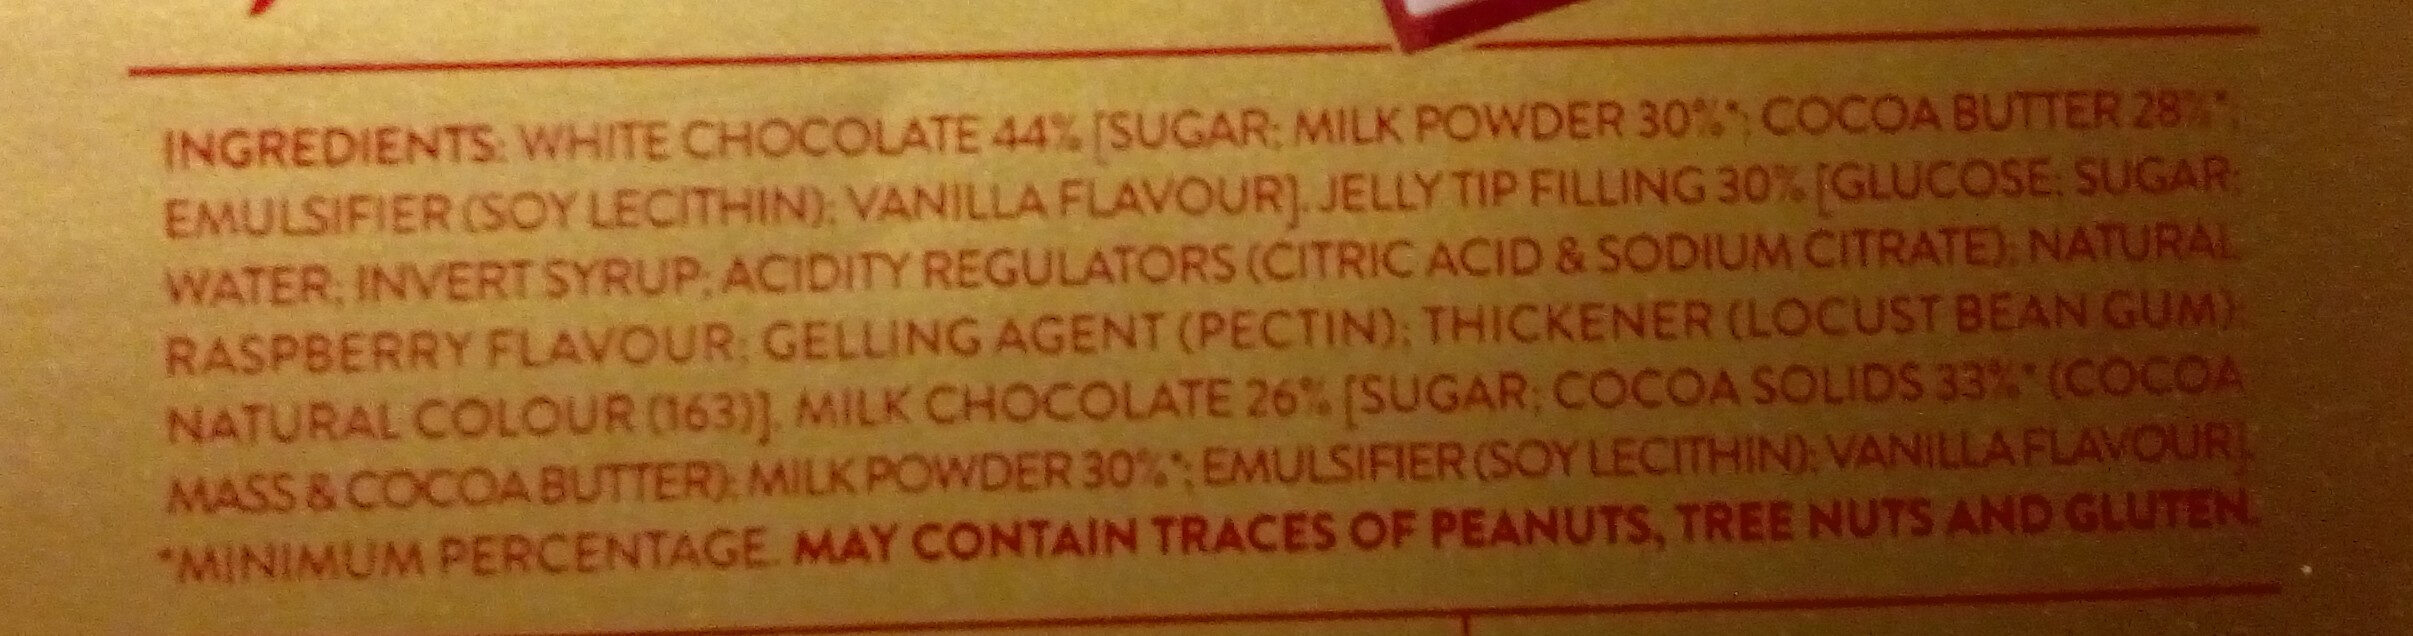 Jelly Tip Block - Ingredients